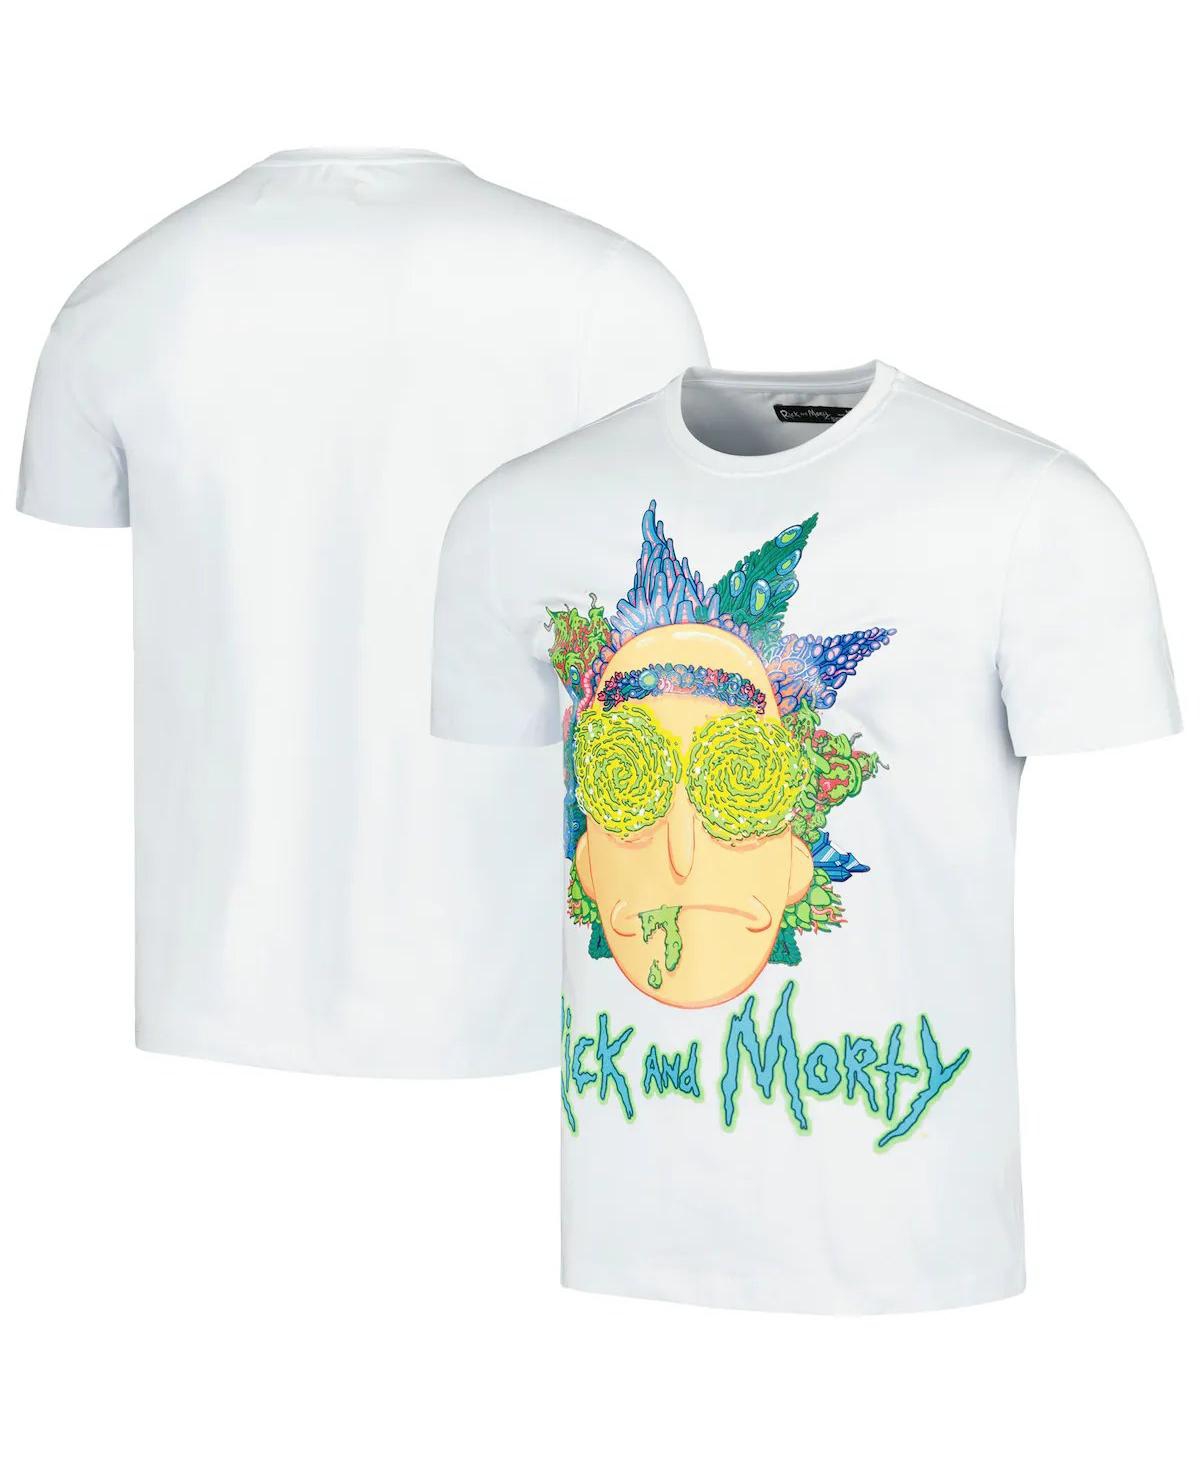 Men's White Rick And Morty Graphic T-Shirt - White